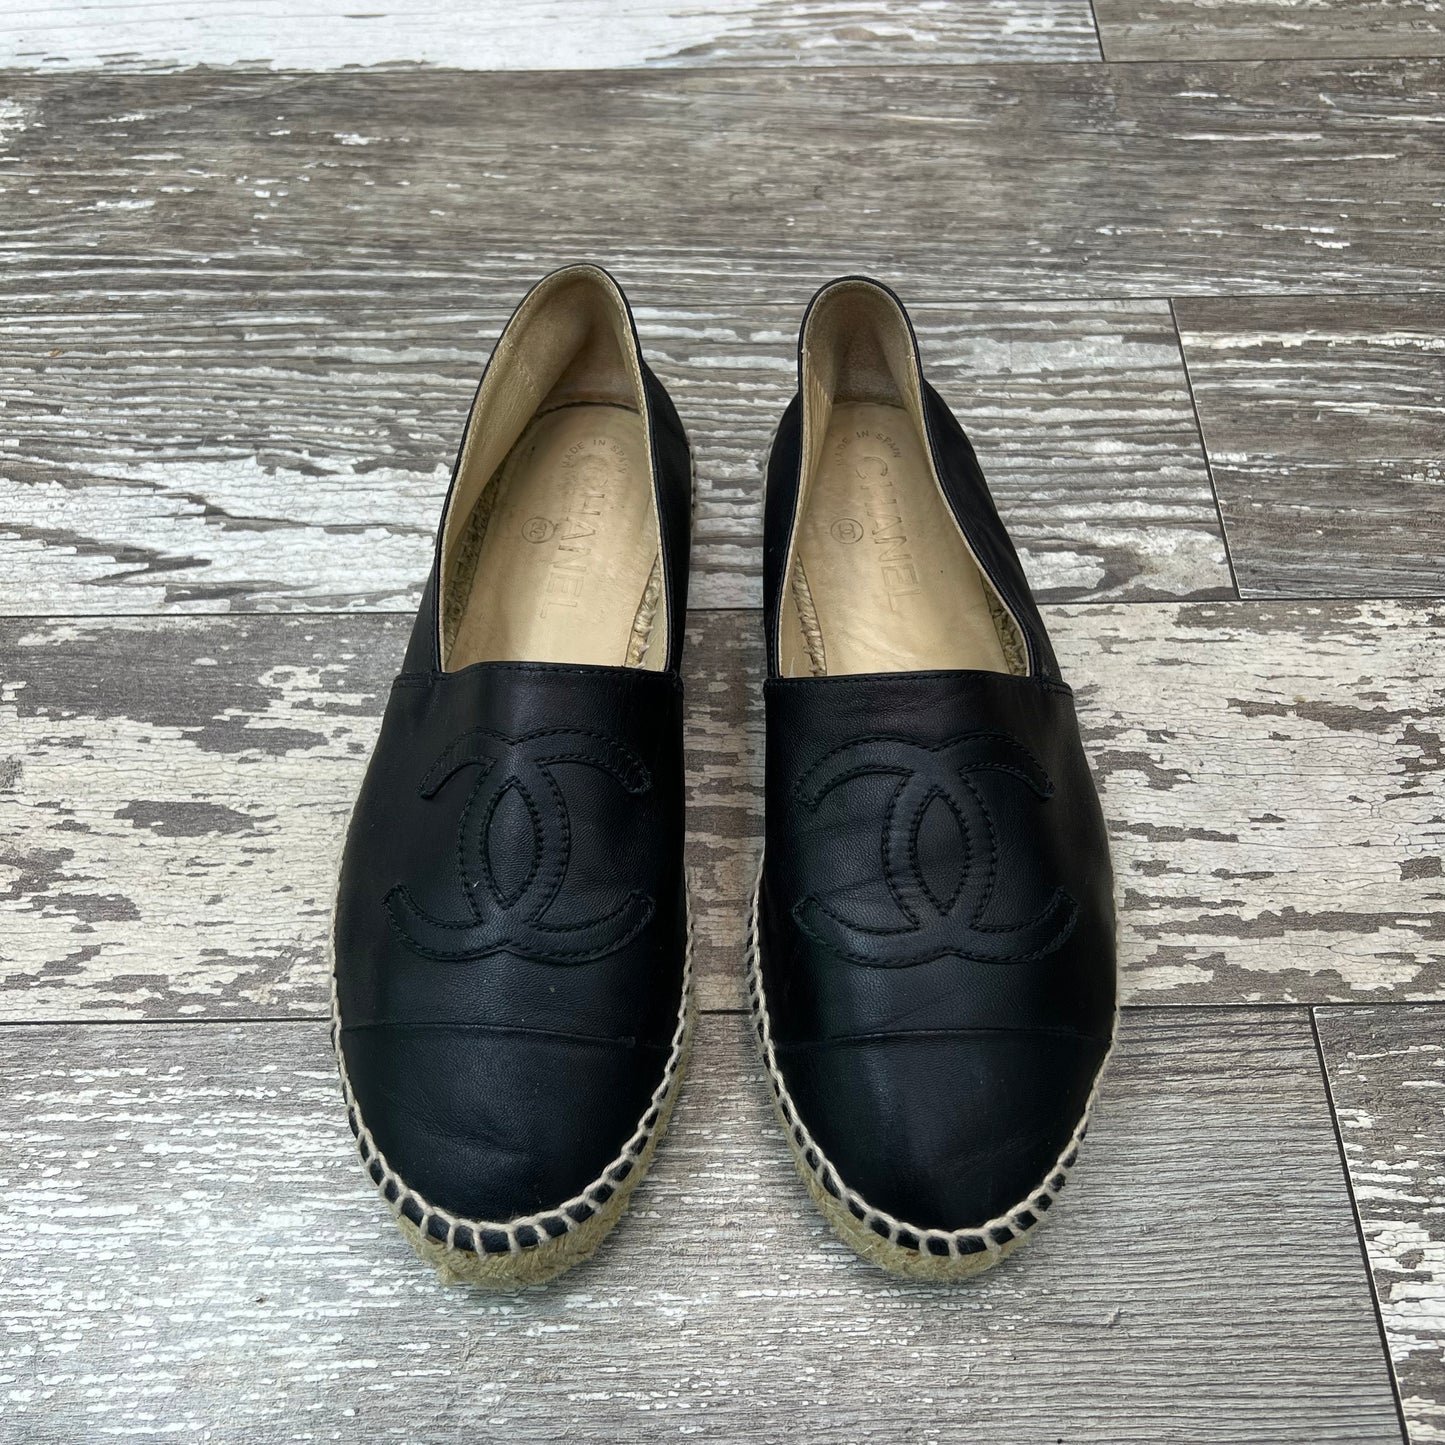 Chanel Black Leather Espadrilles, Size 38